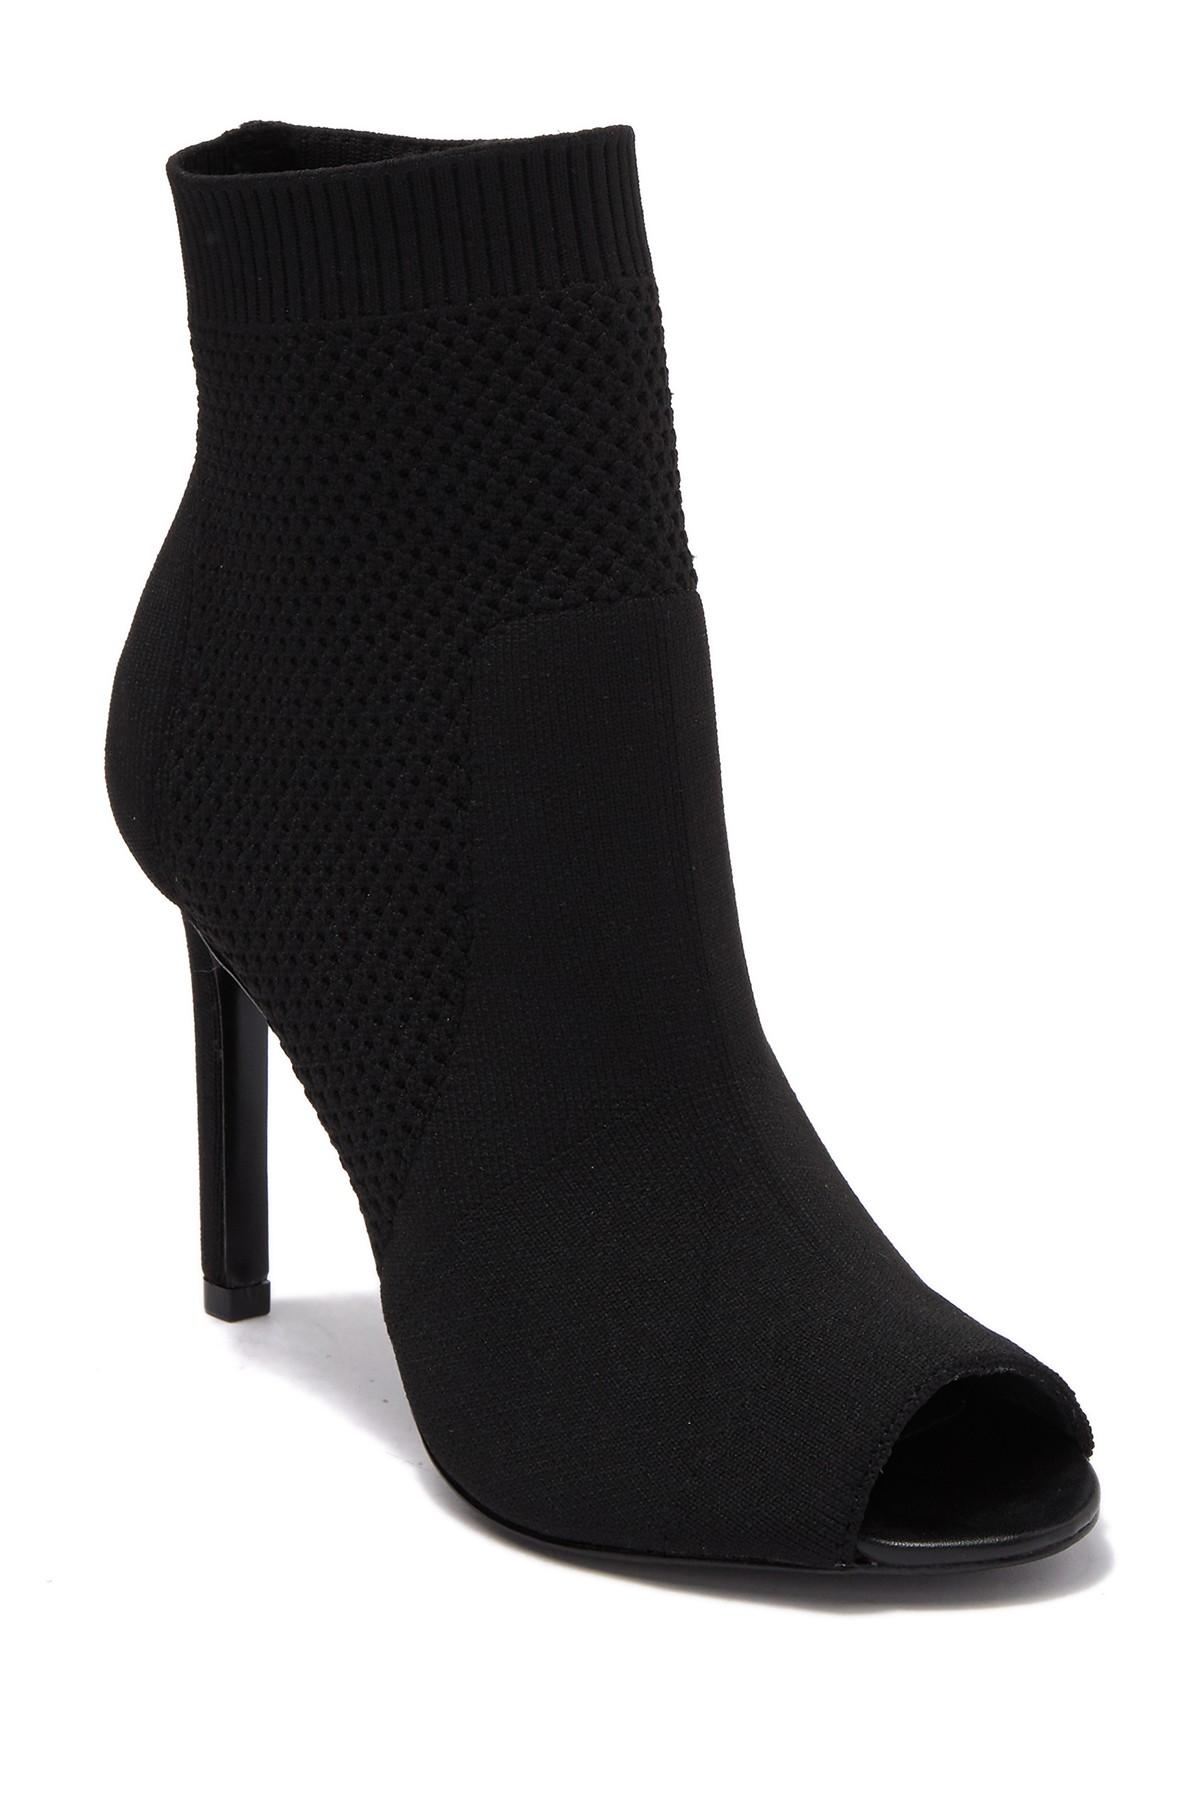 Charles David Ideal Knit Peep Toe Sock Bootie in Black | Lyst